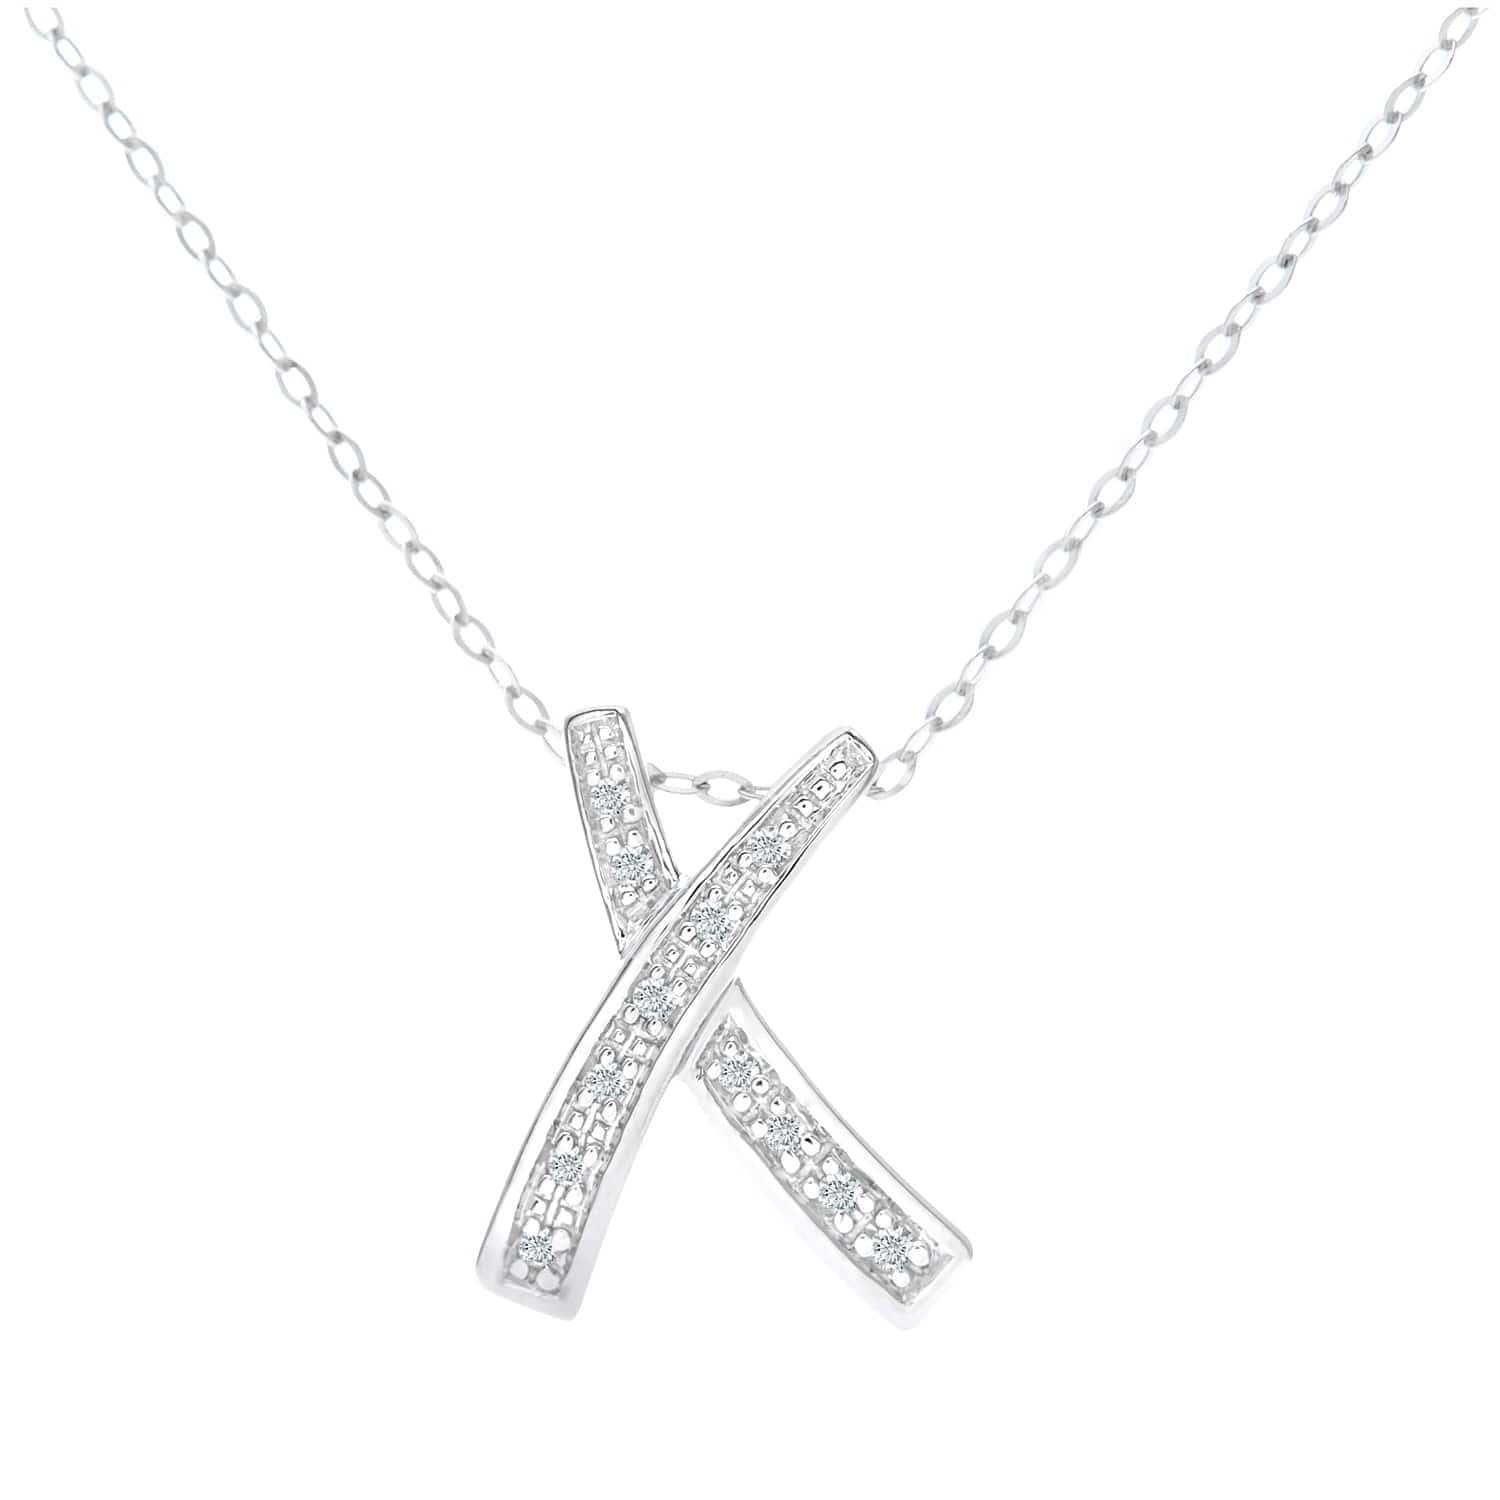 Lynora Luxe Pendant White Gold 9ct / Diamond 9ct White Gold Diamond Kiss Pendant Necklace